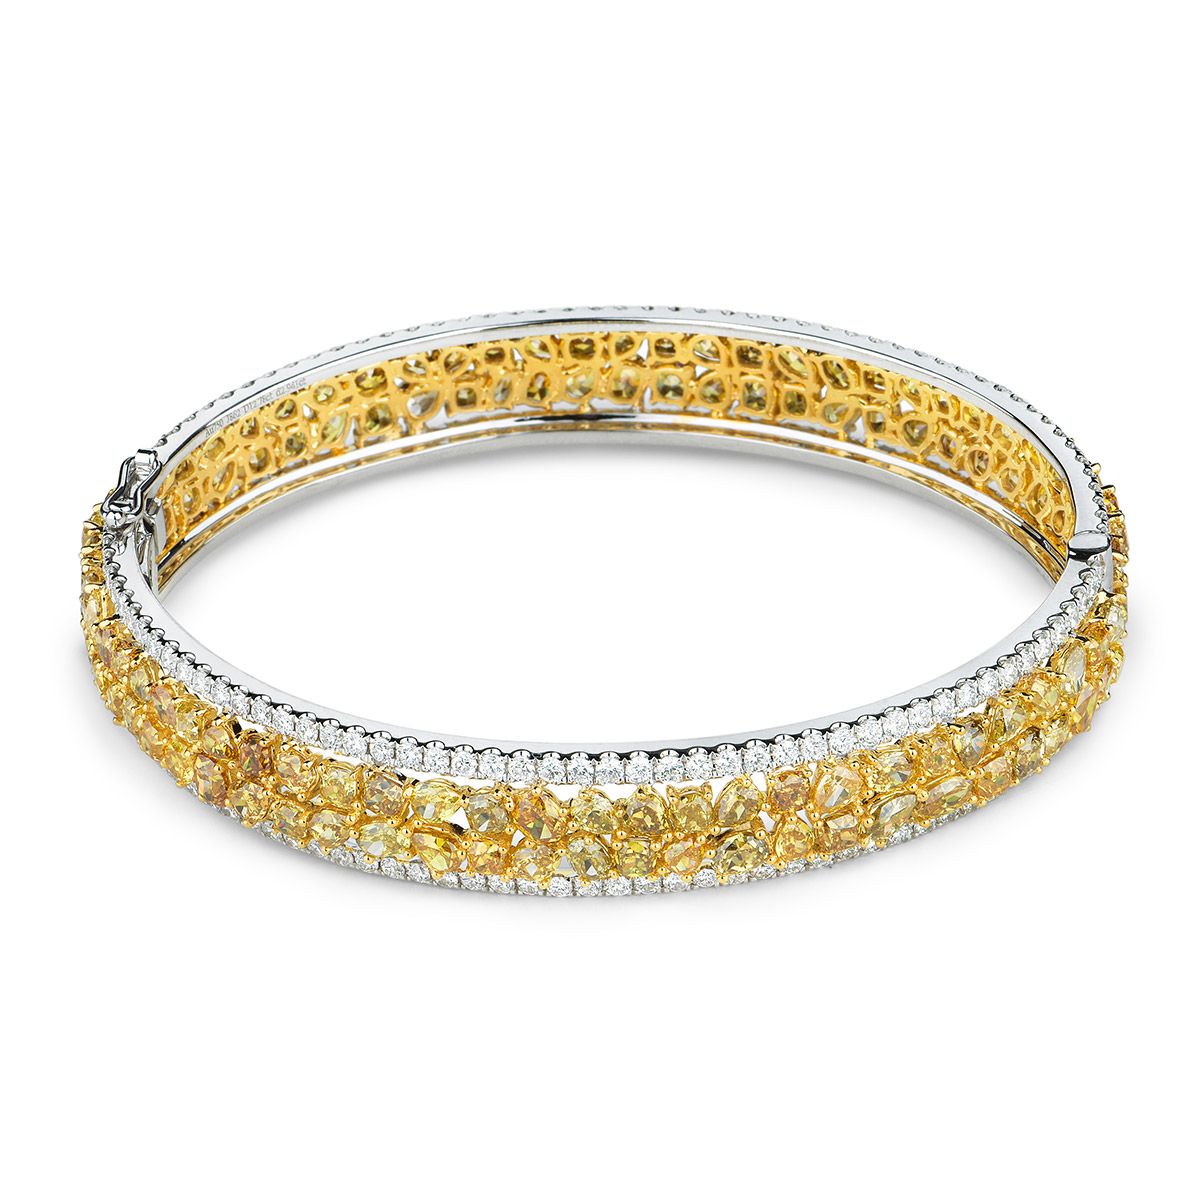 Fancy Deep Yellow Diamond Bracelet, 16.52 Ct. TW, Mix shape